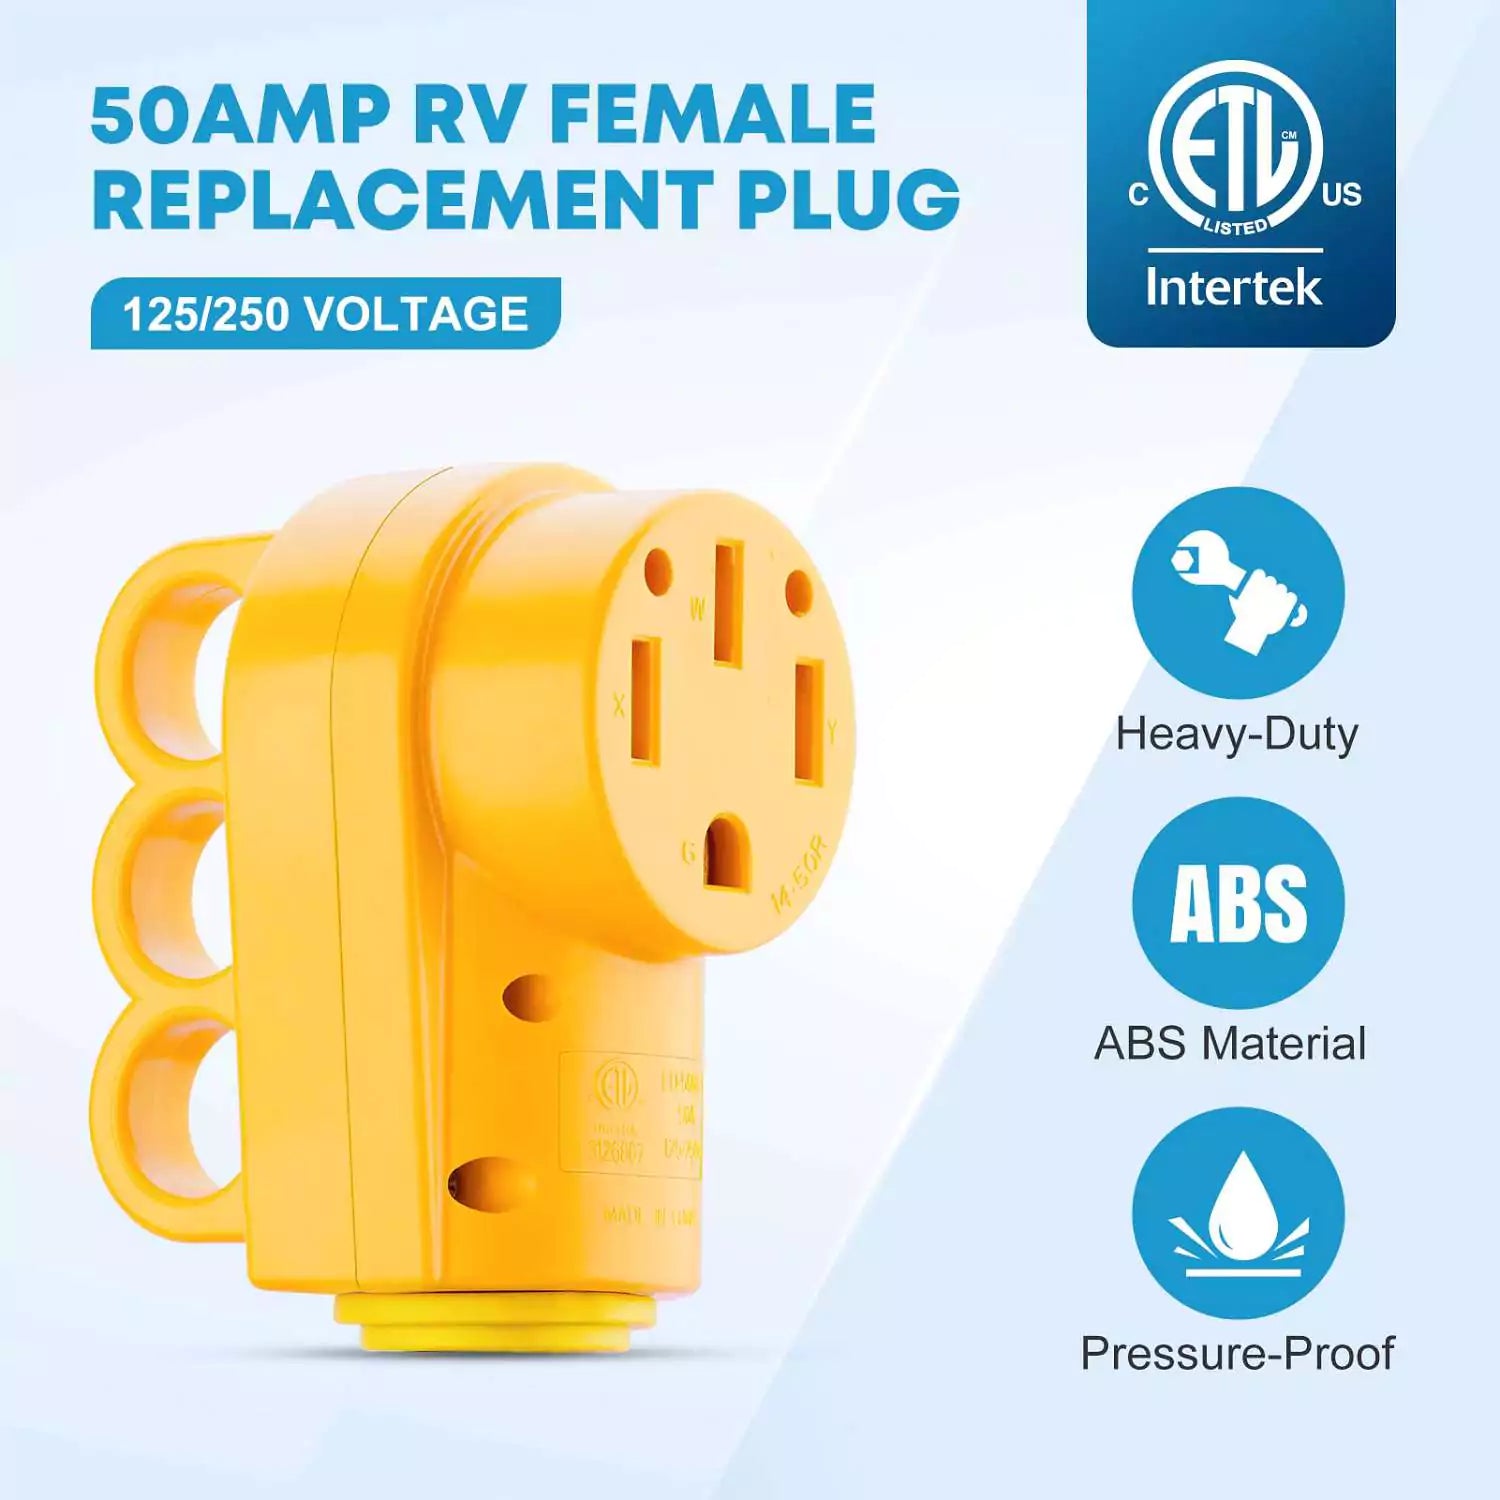 50 amp RV female replacement plug